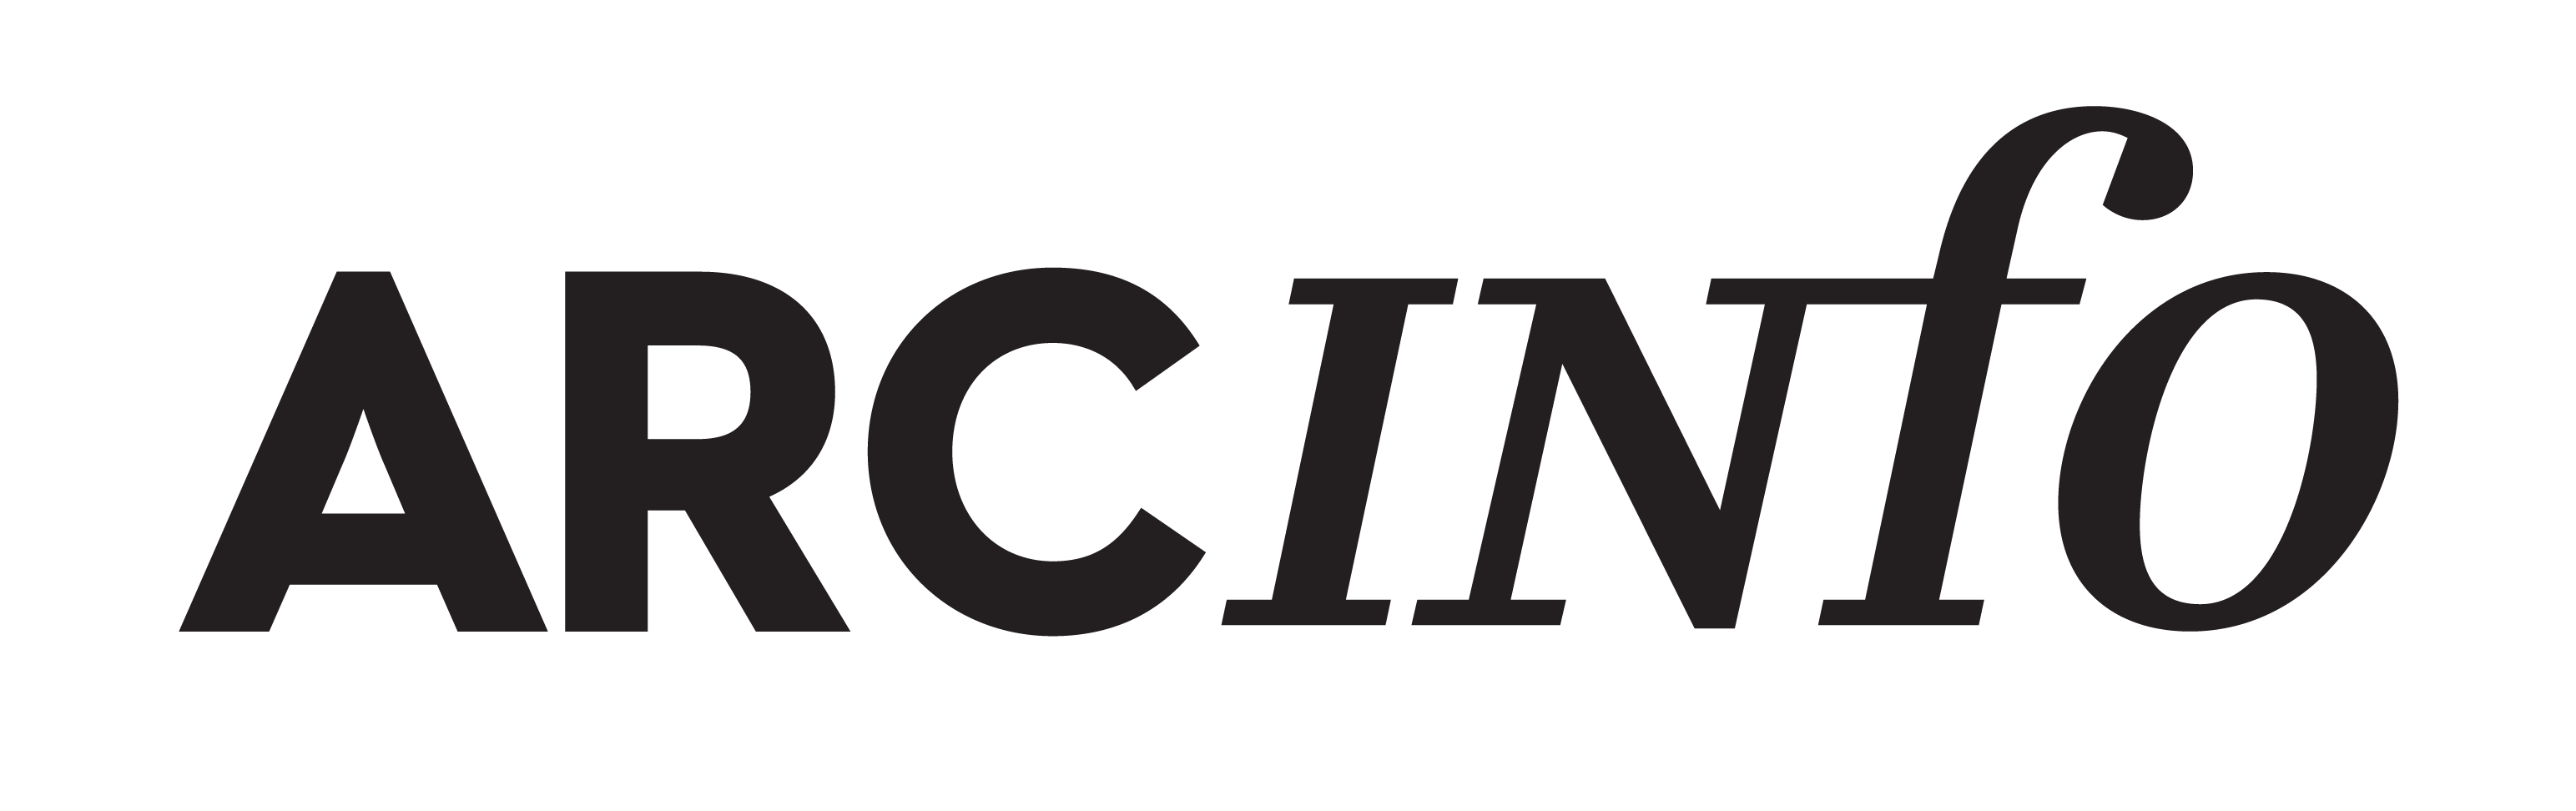 ArcInfo Logotype 2017 1 ligne NB